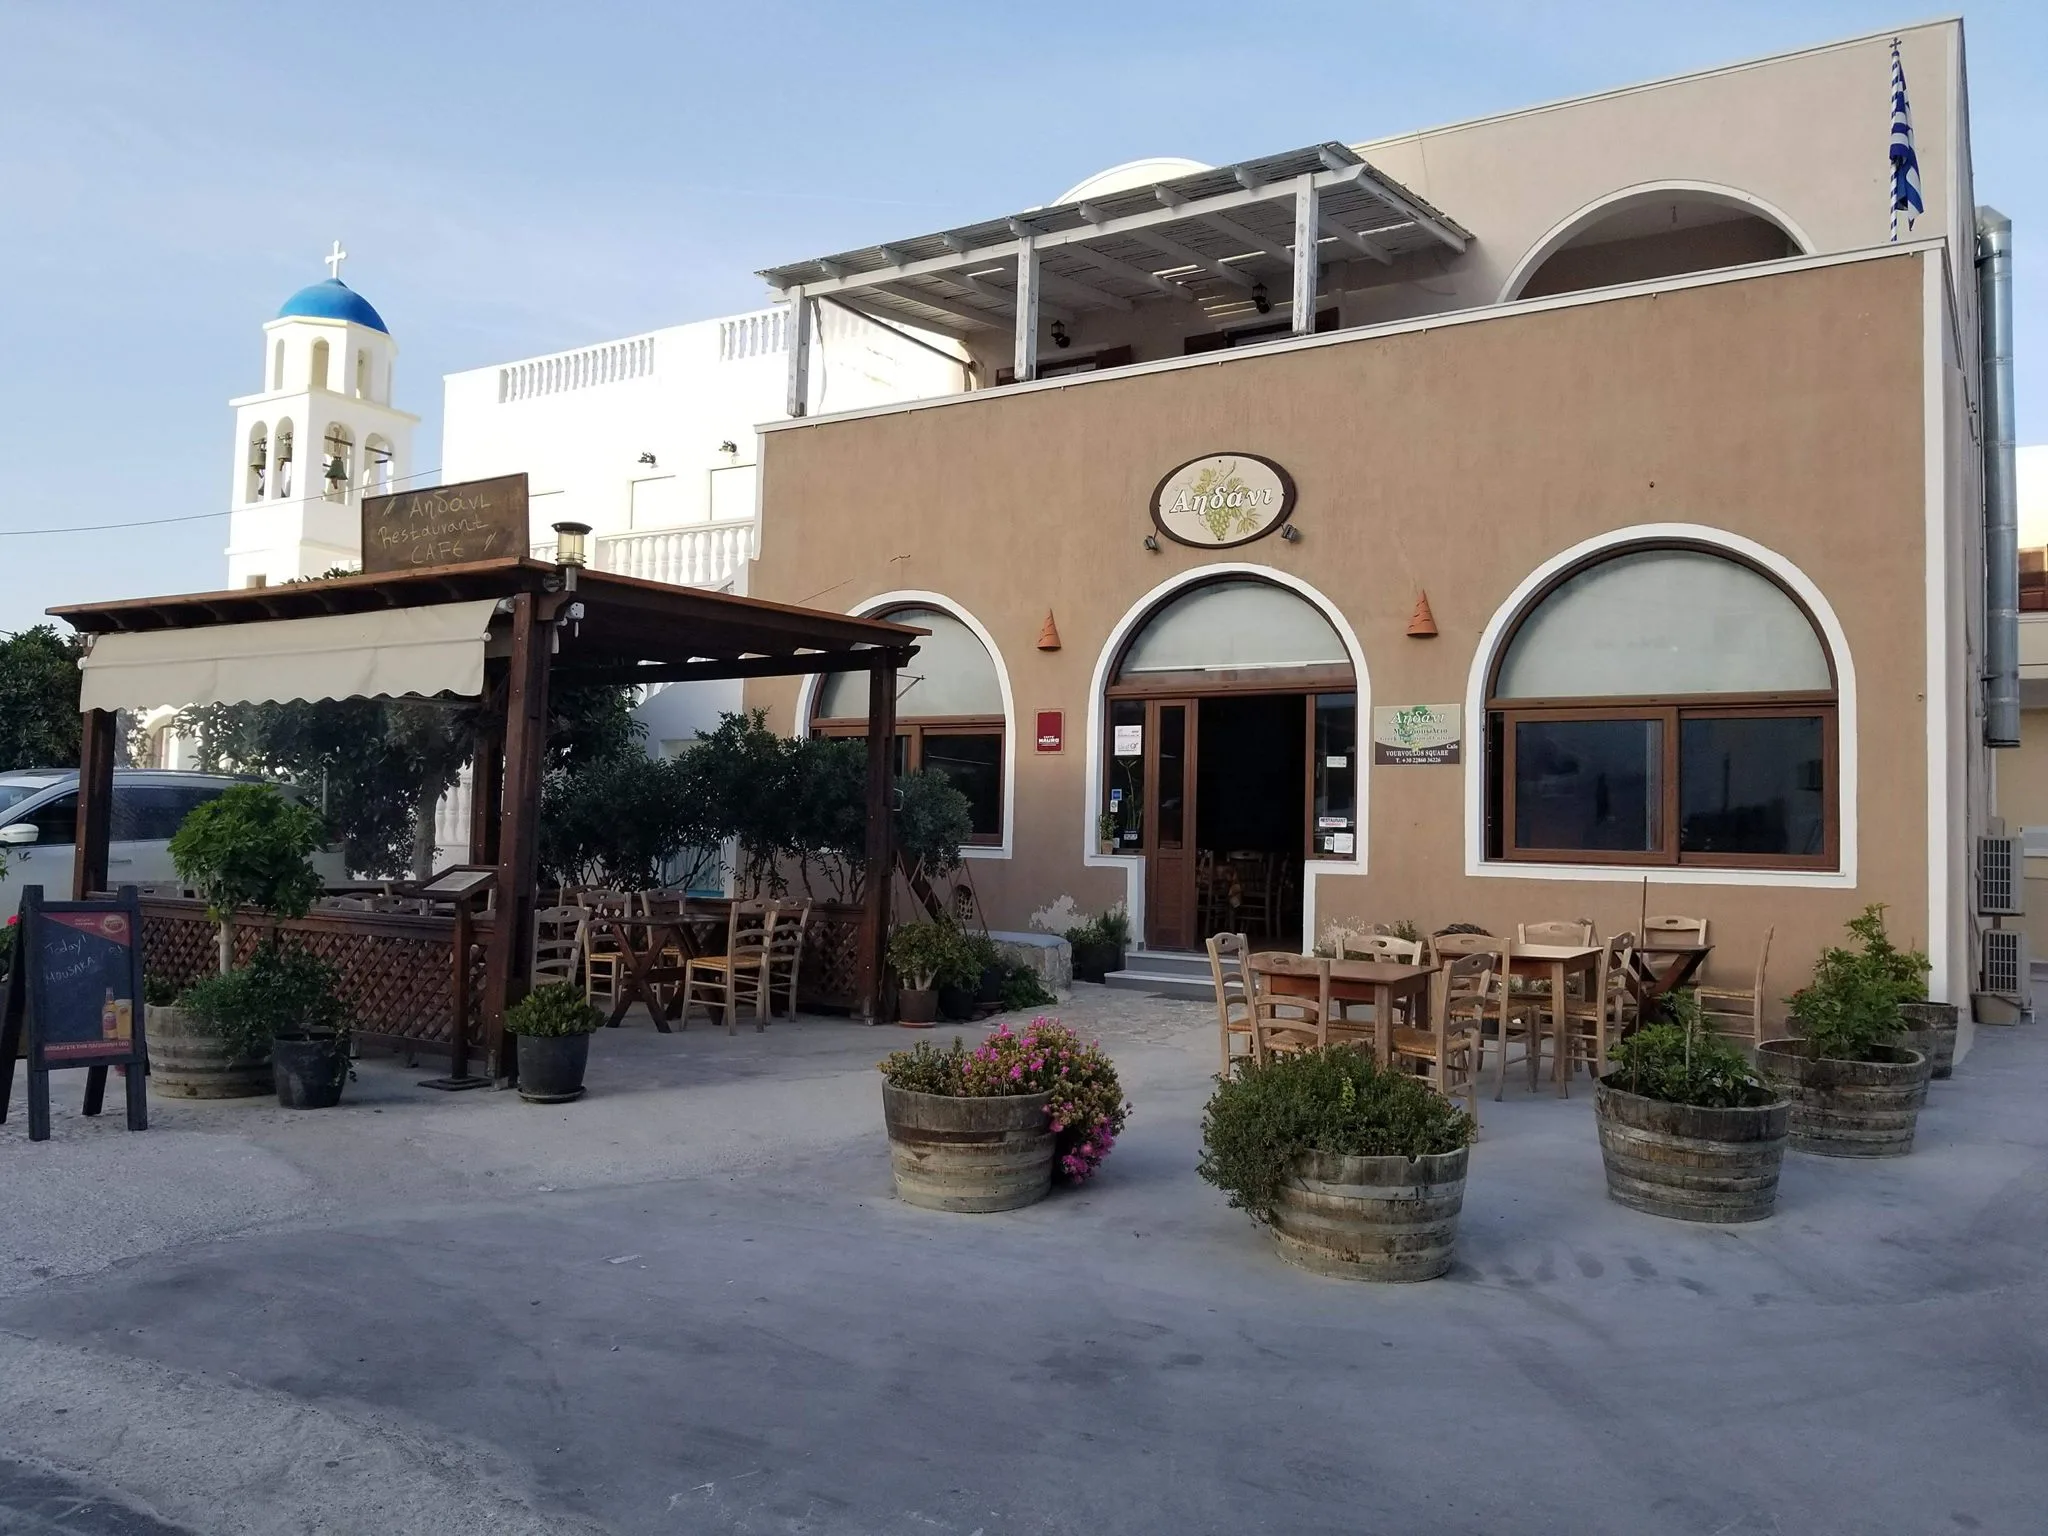 Aidani in Greece, one of the best restaurants in Santorini